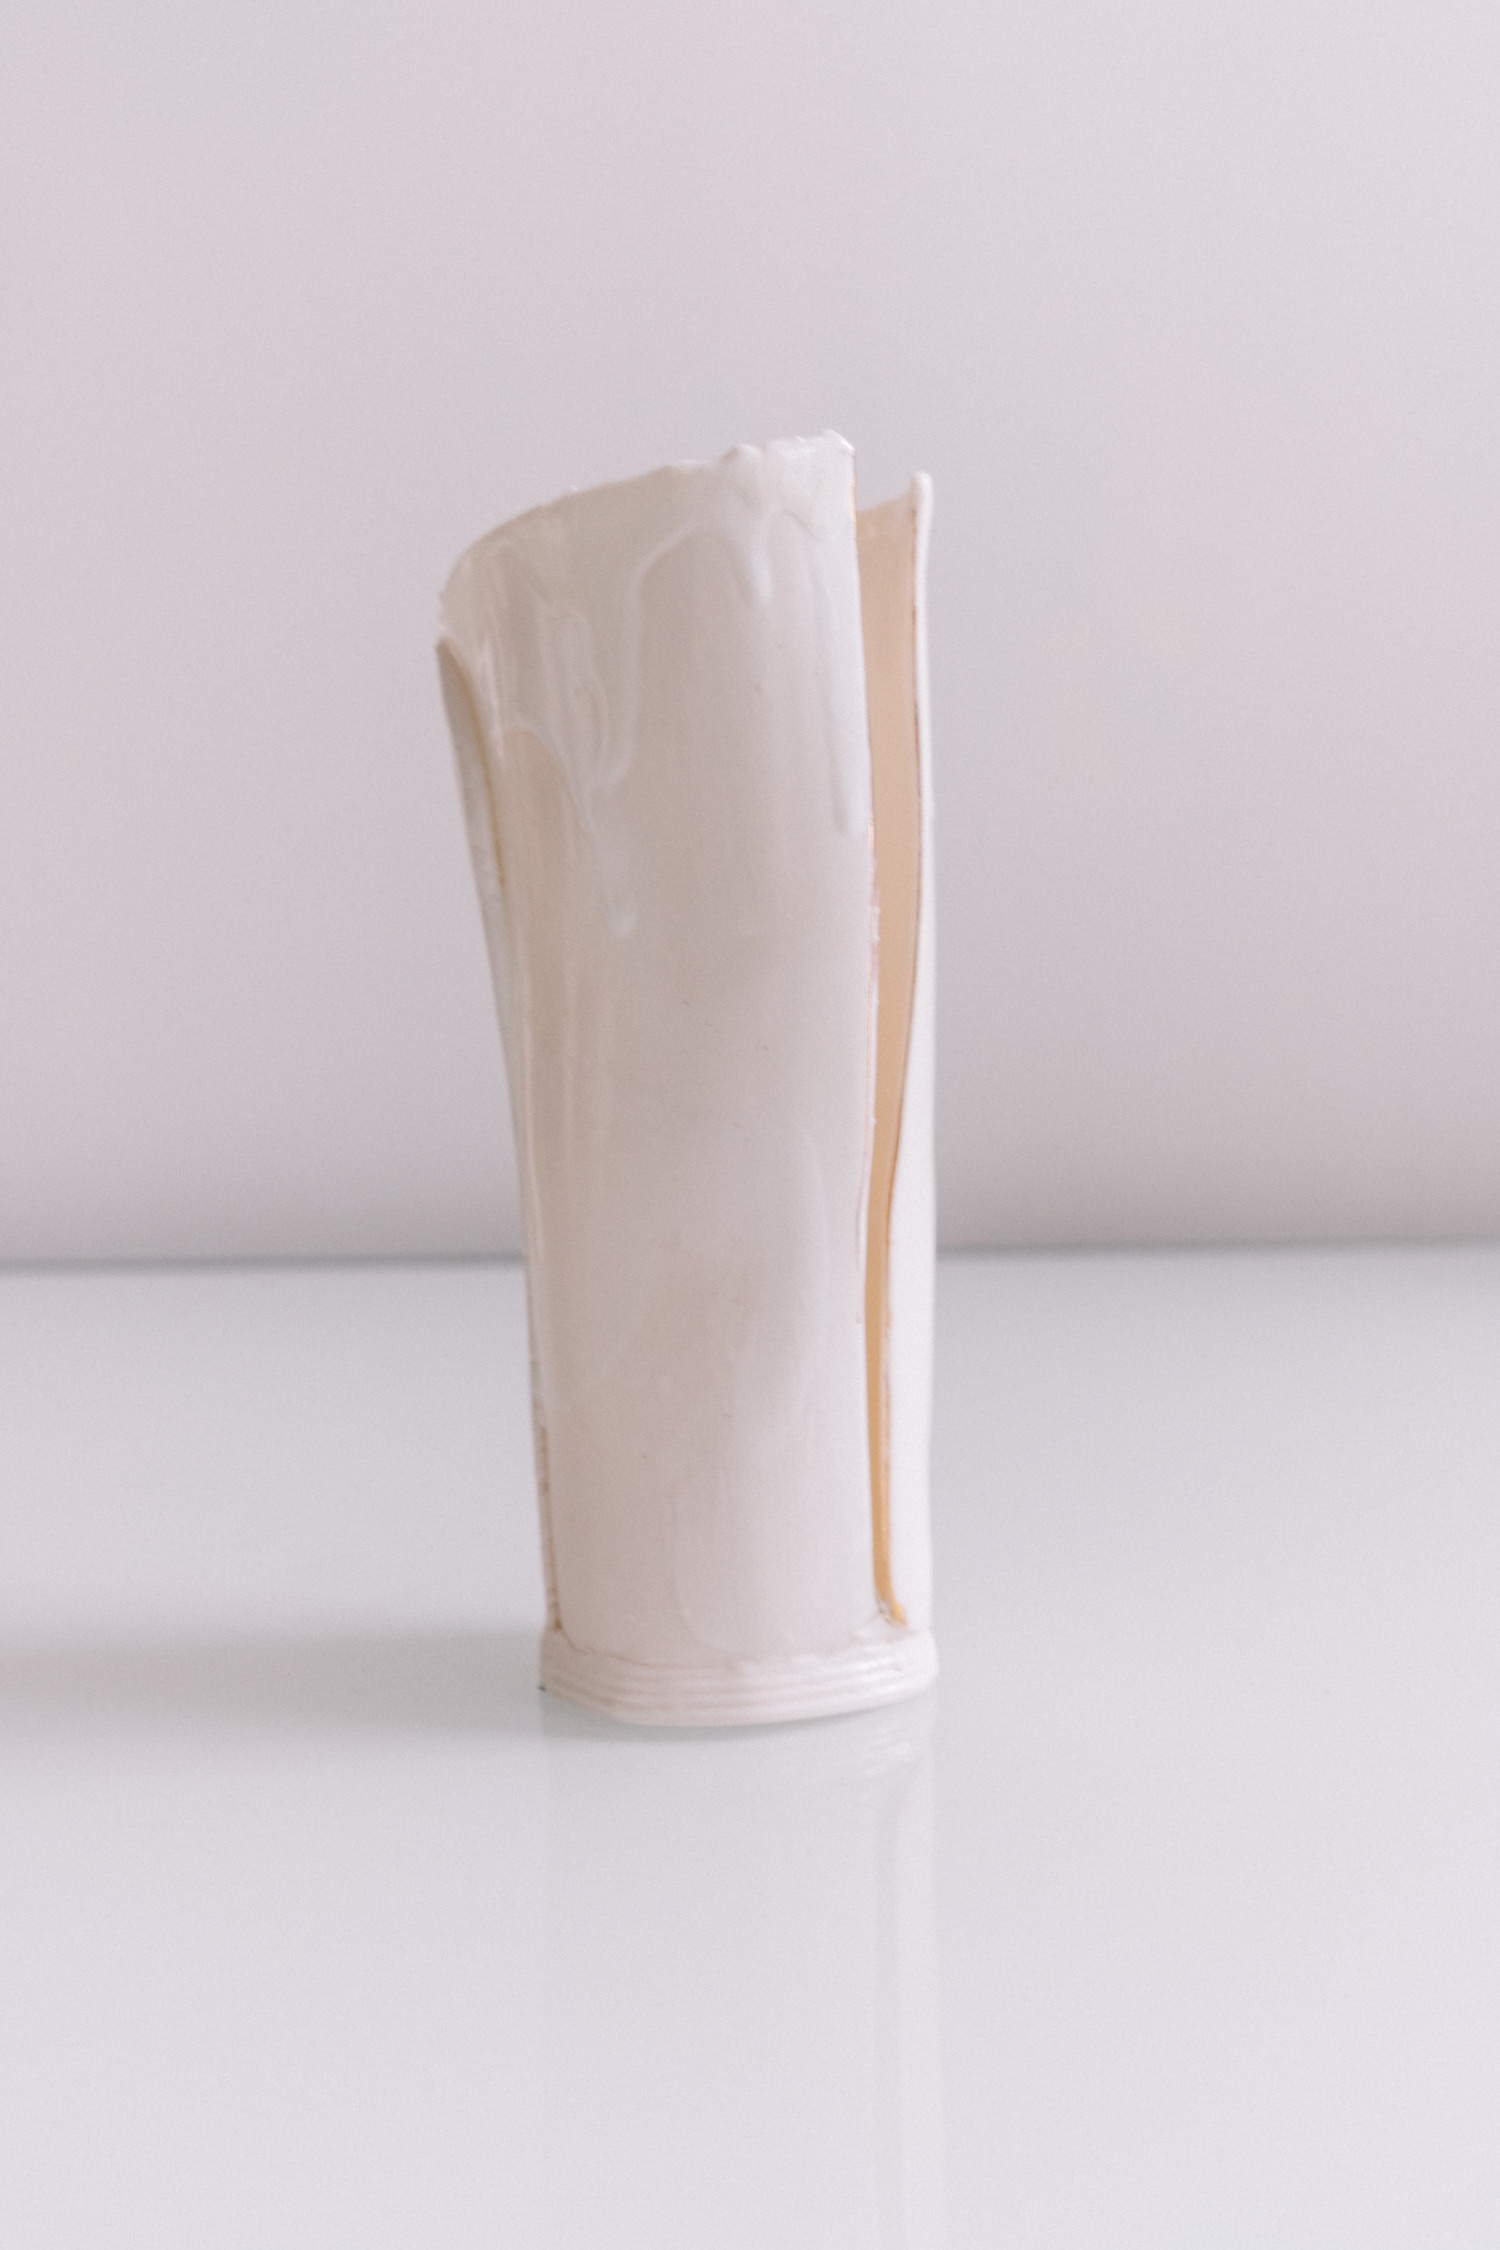 white vase 6 1.jpg